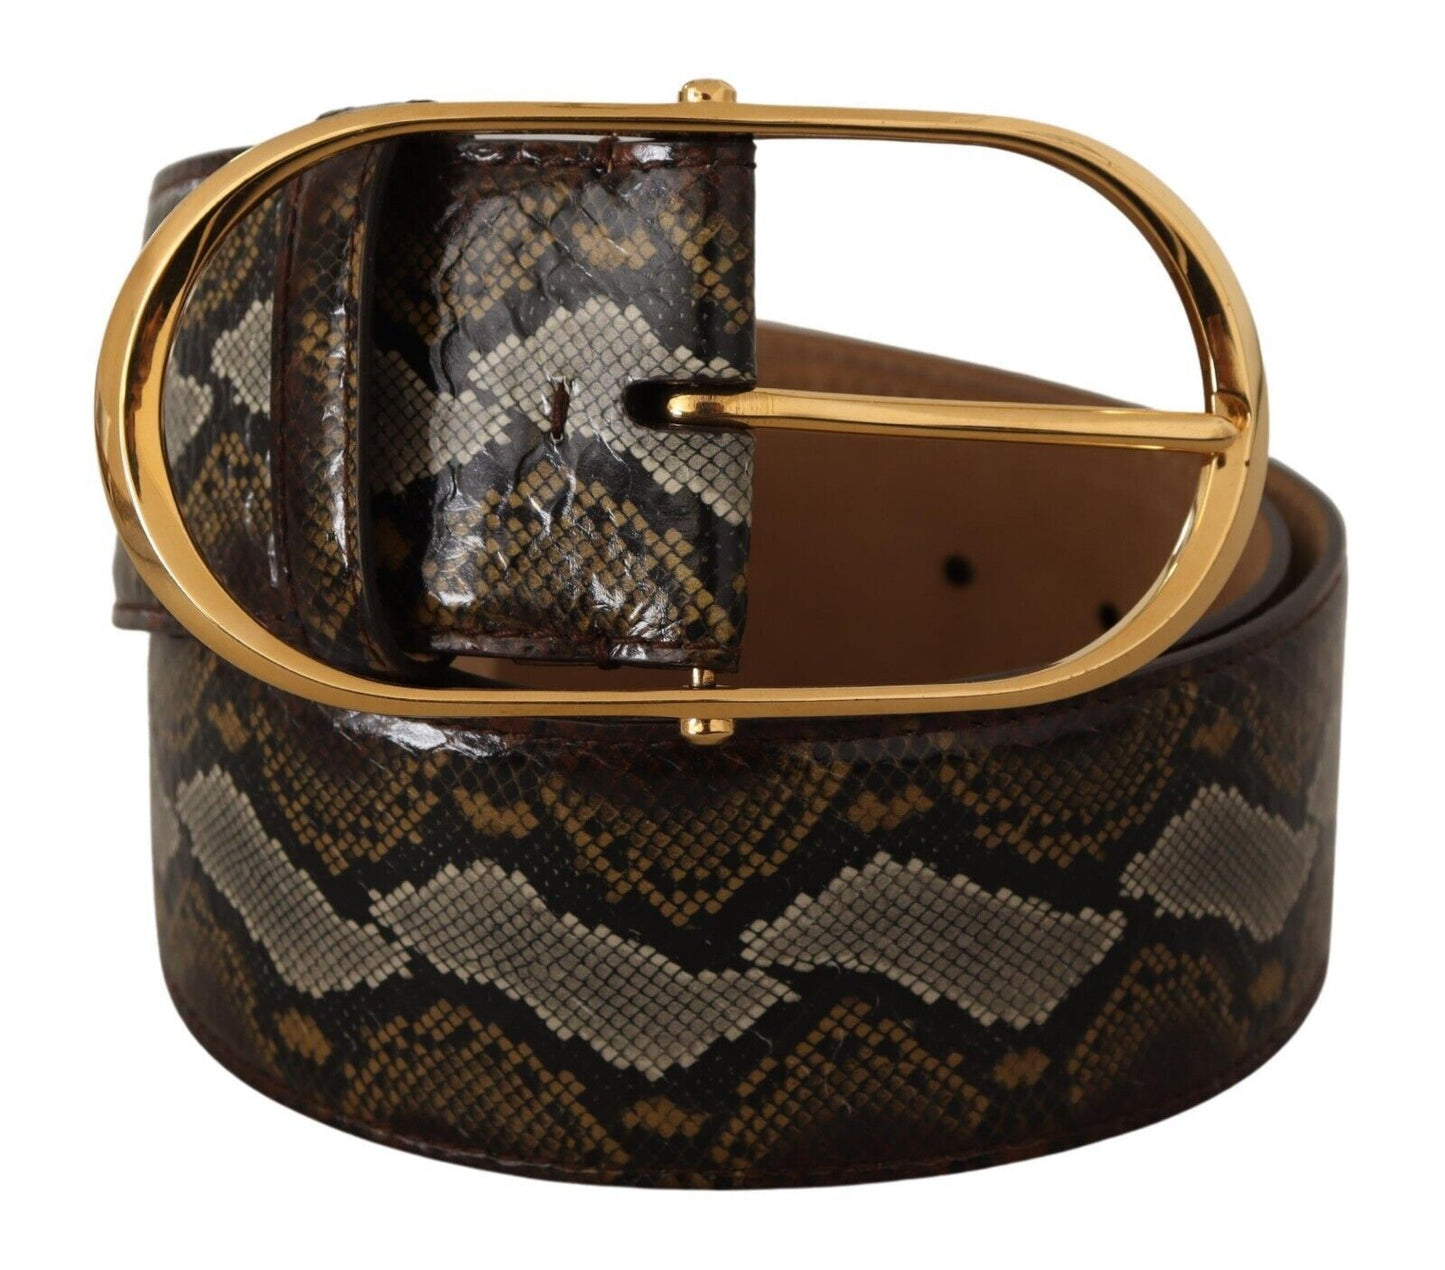 Dolce & Gabbana Brown Python Leather Gold Oval Buckle Belt